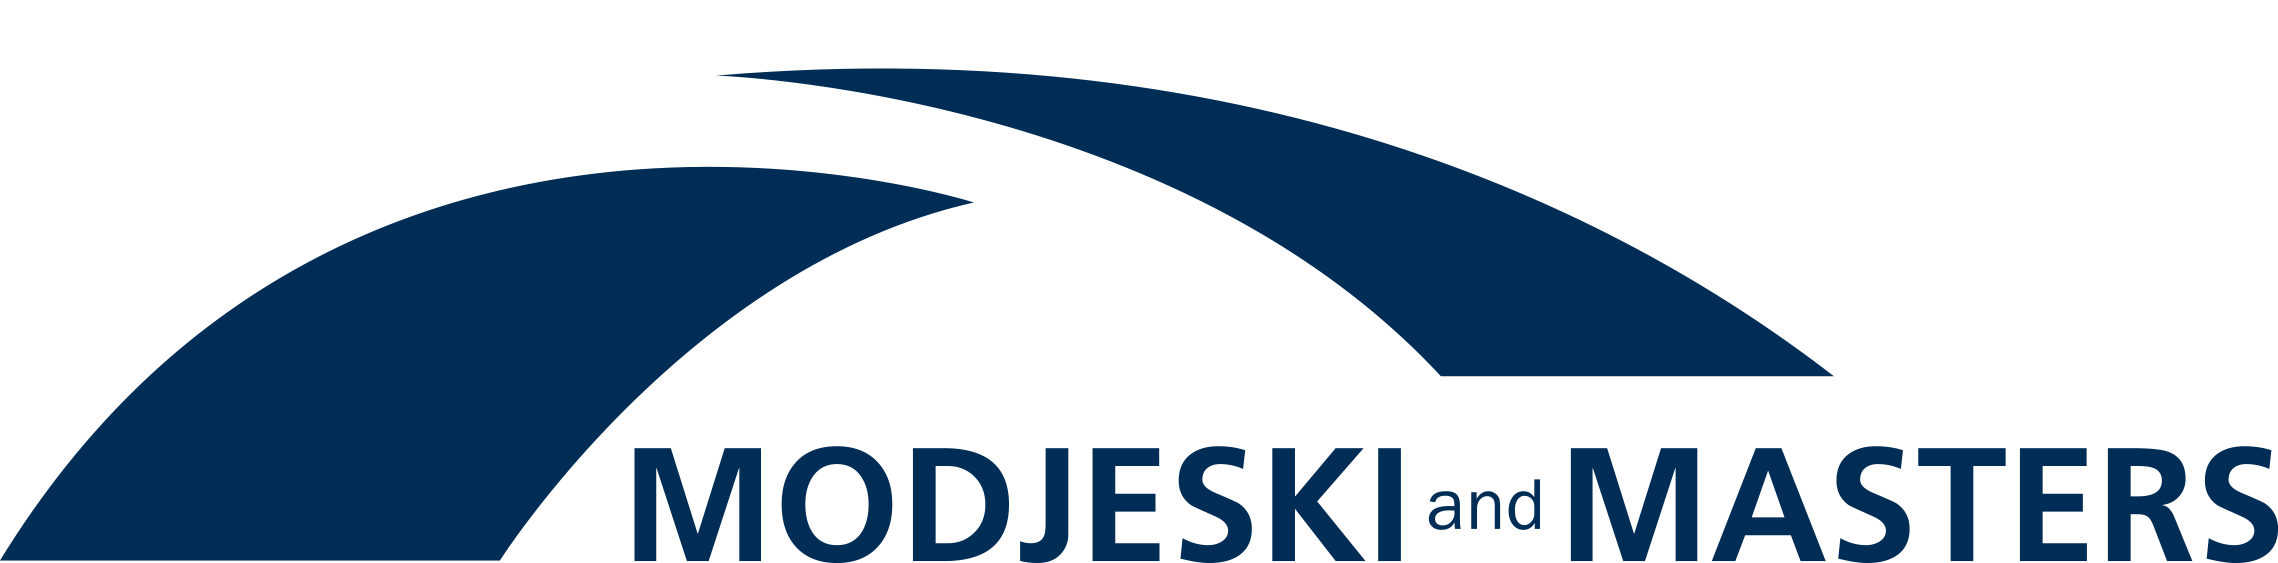 Modjeski & Masters logo